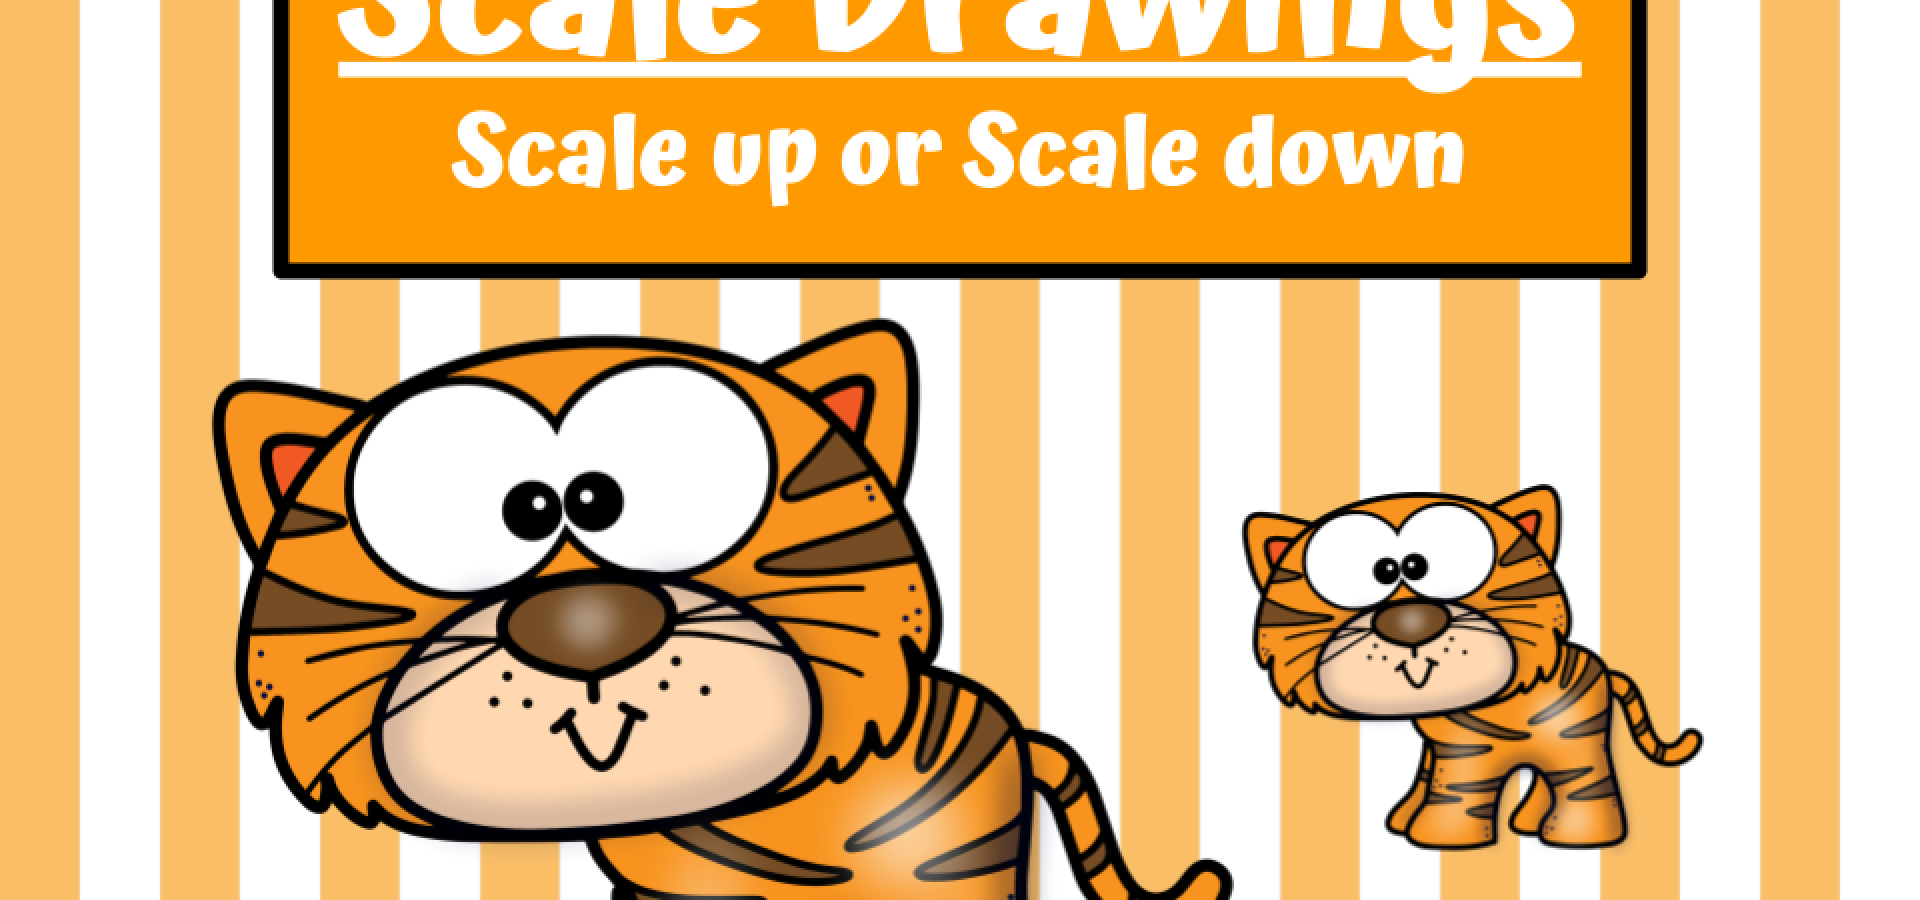 s1Editable Scale Drawings